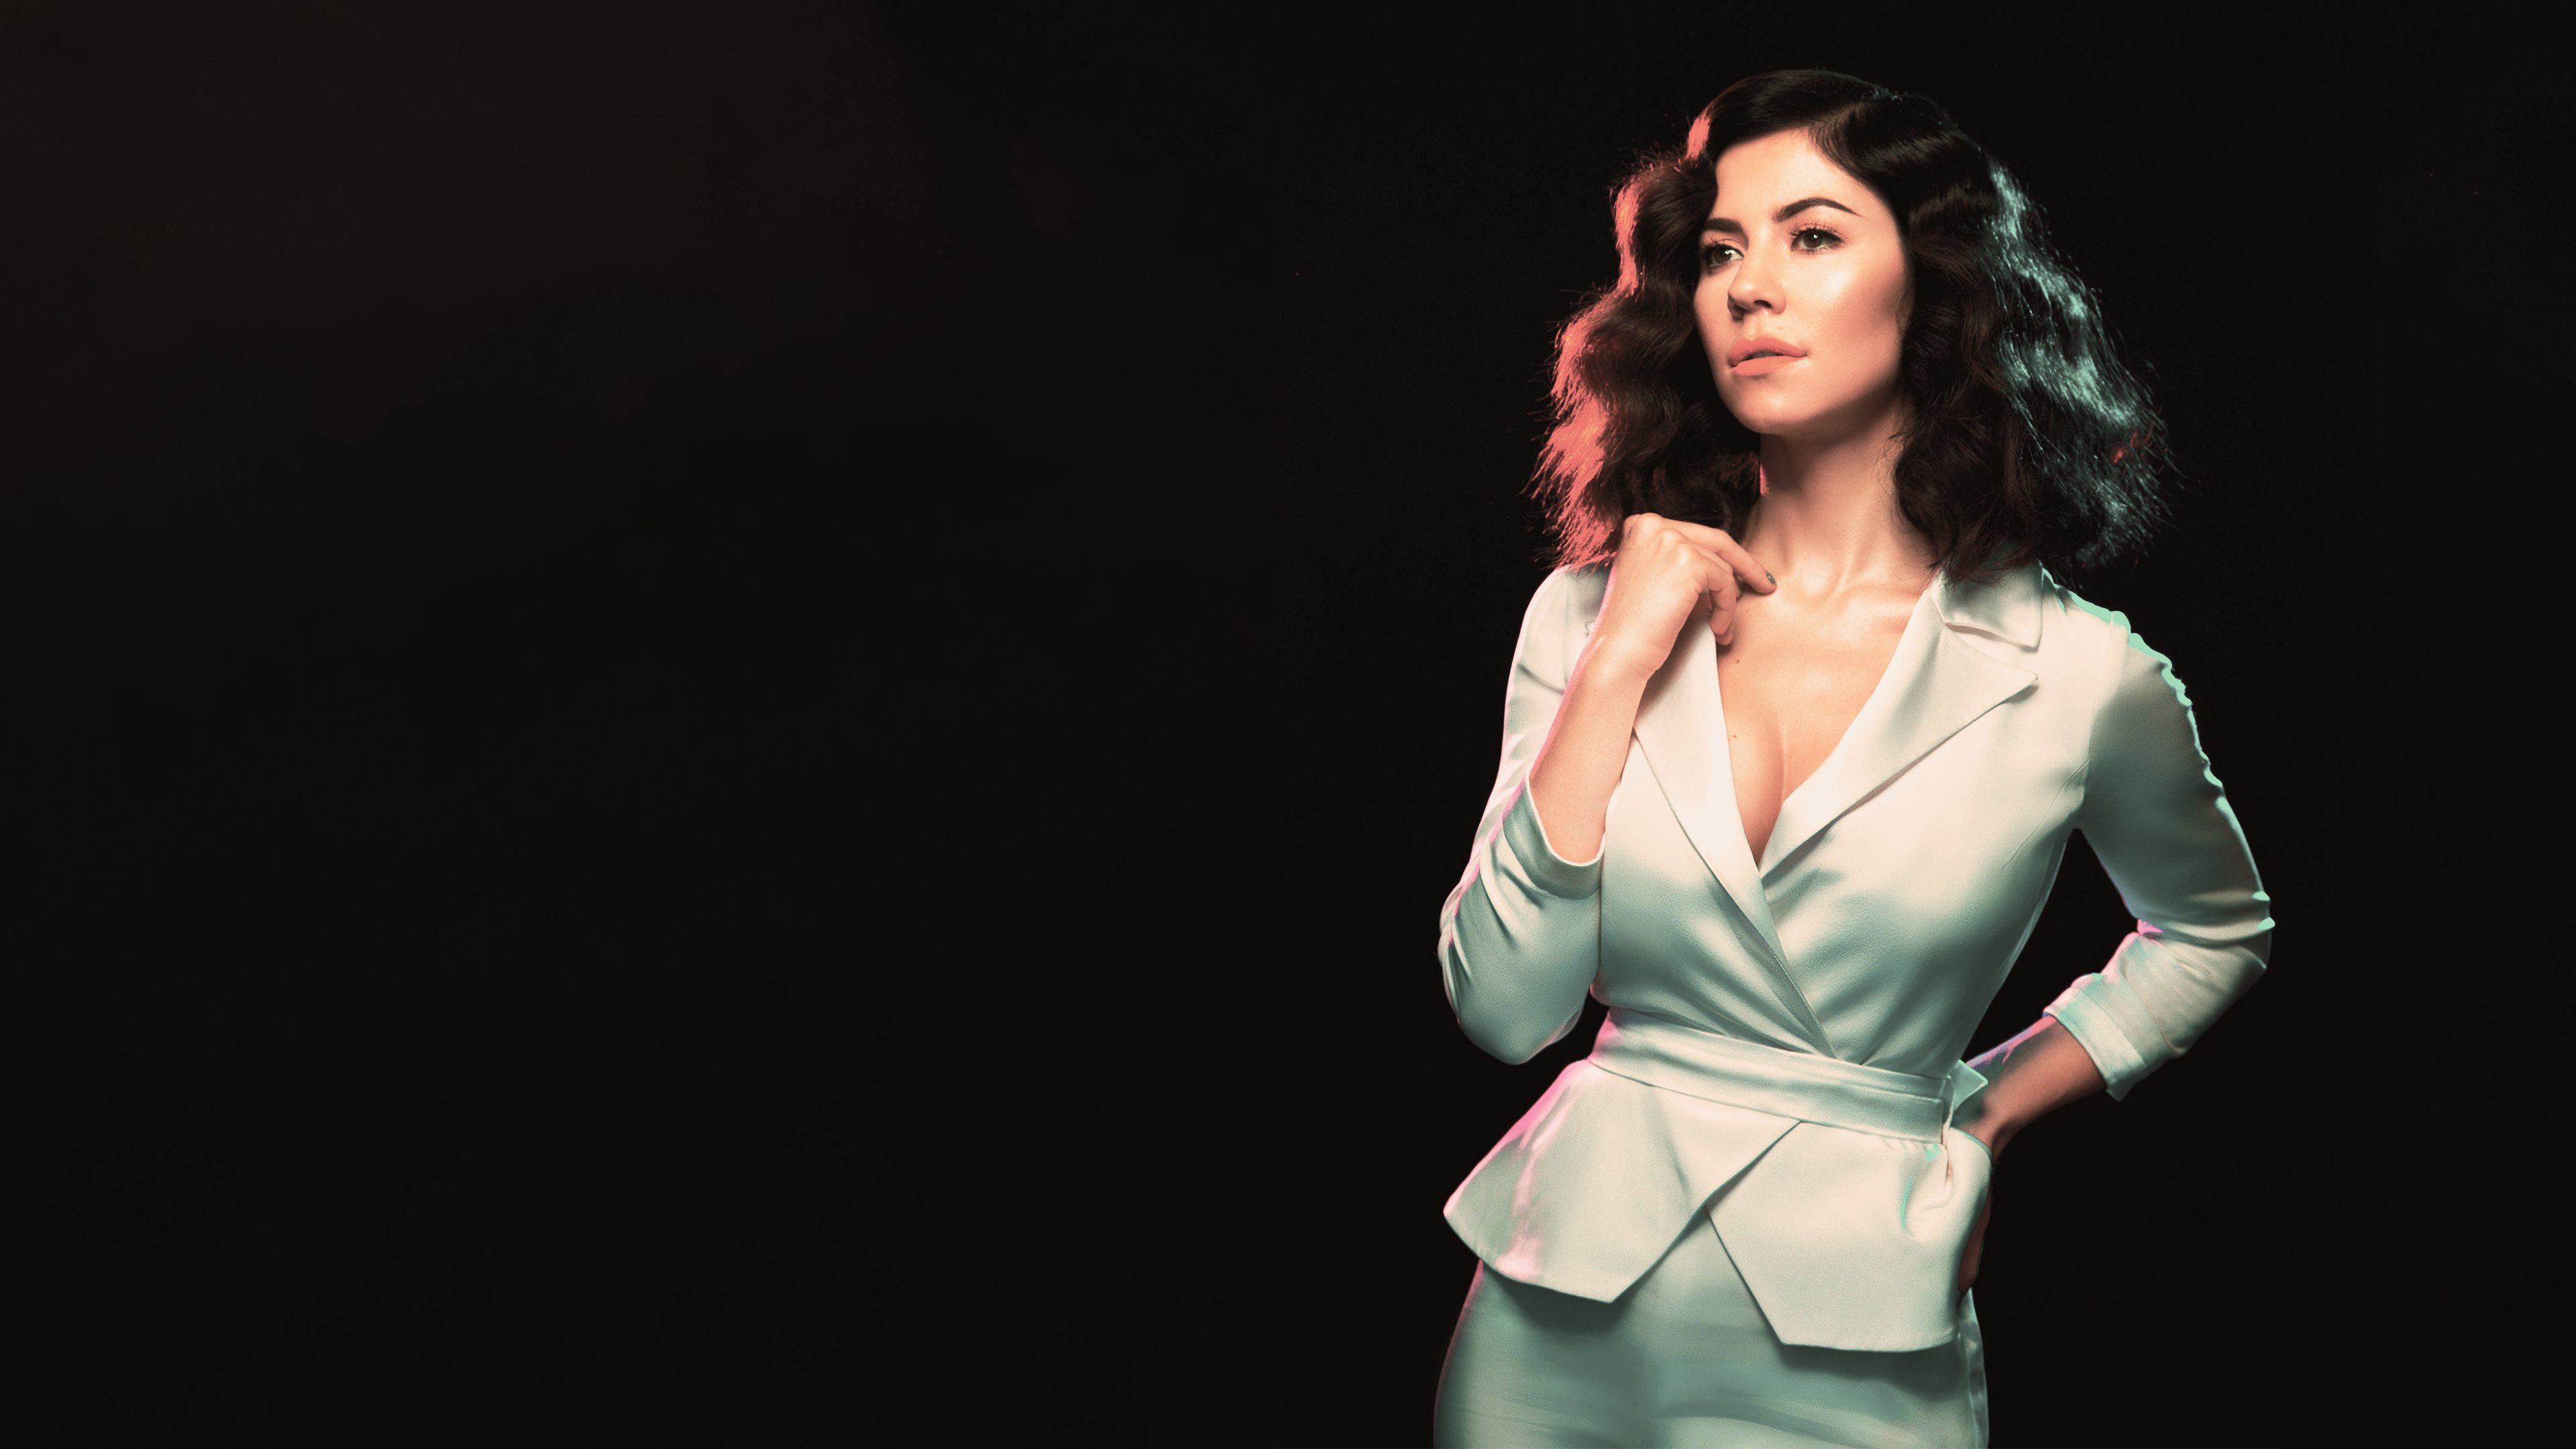 Marina And The Diamonds Wallpapers